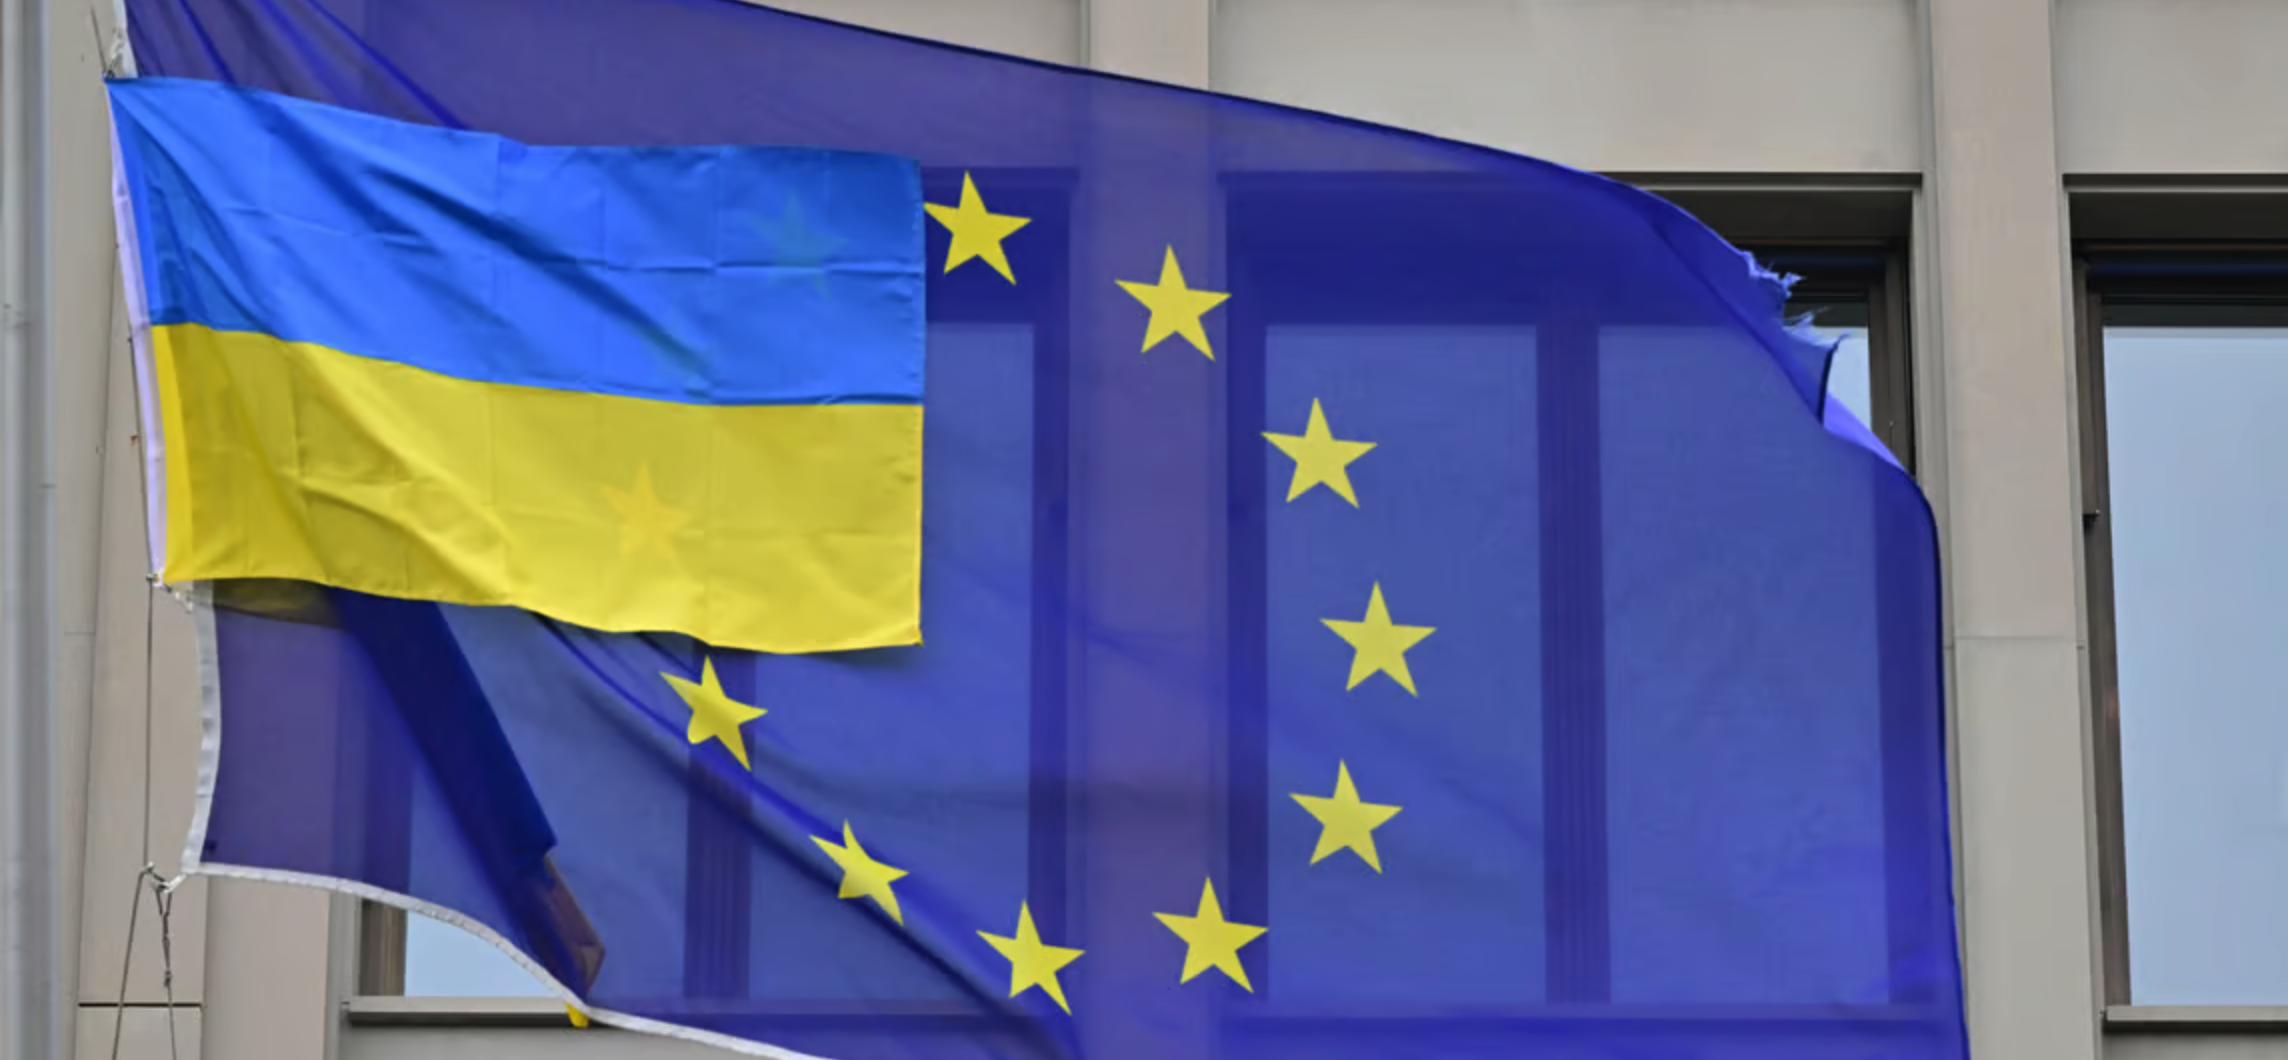 “Historic week”: talks on Ukraine’s EU accession to begin tomorrow